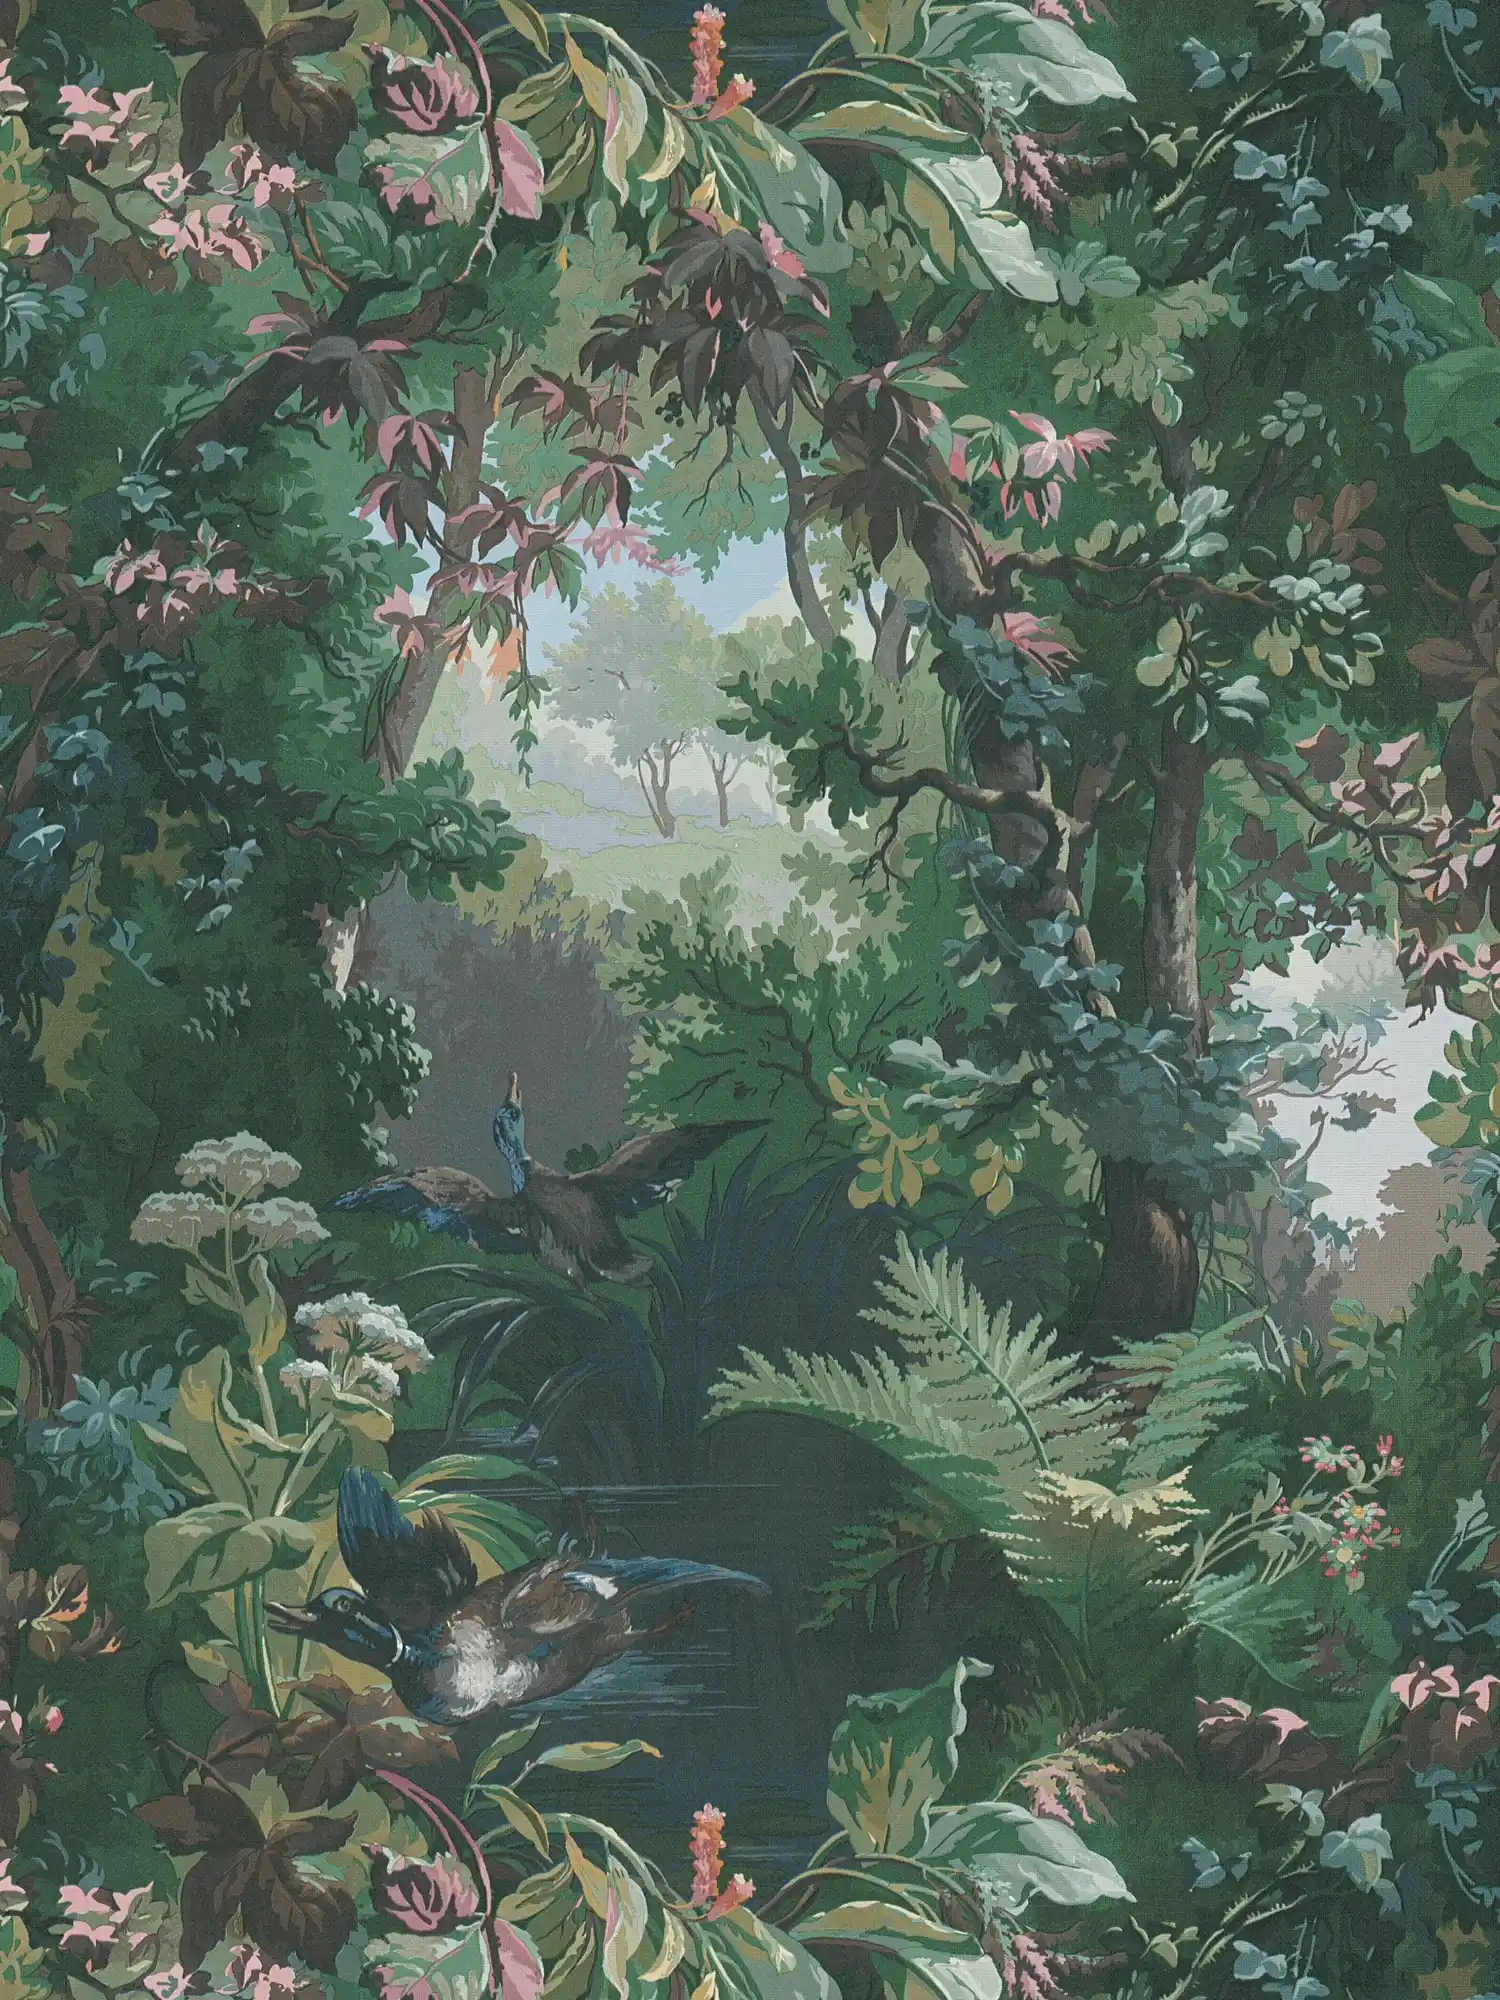 Hunting motif wallpaper, forest & ducks - green, blue, pink
